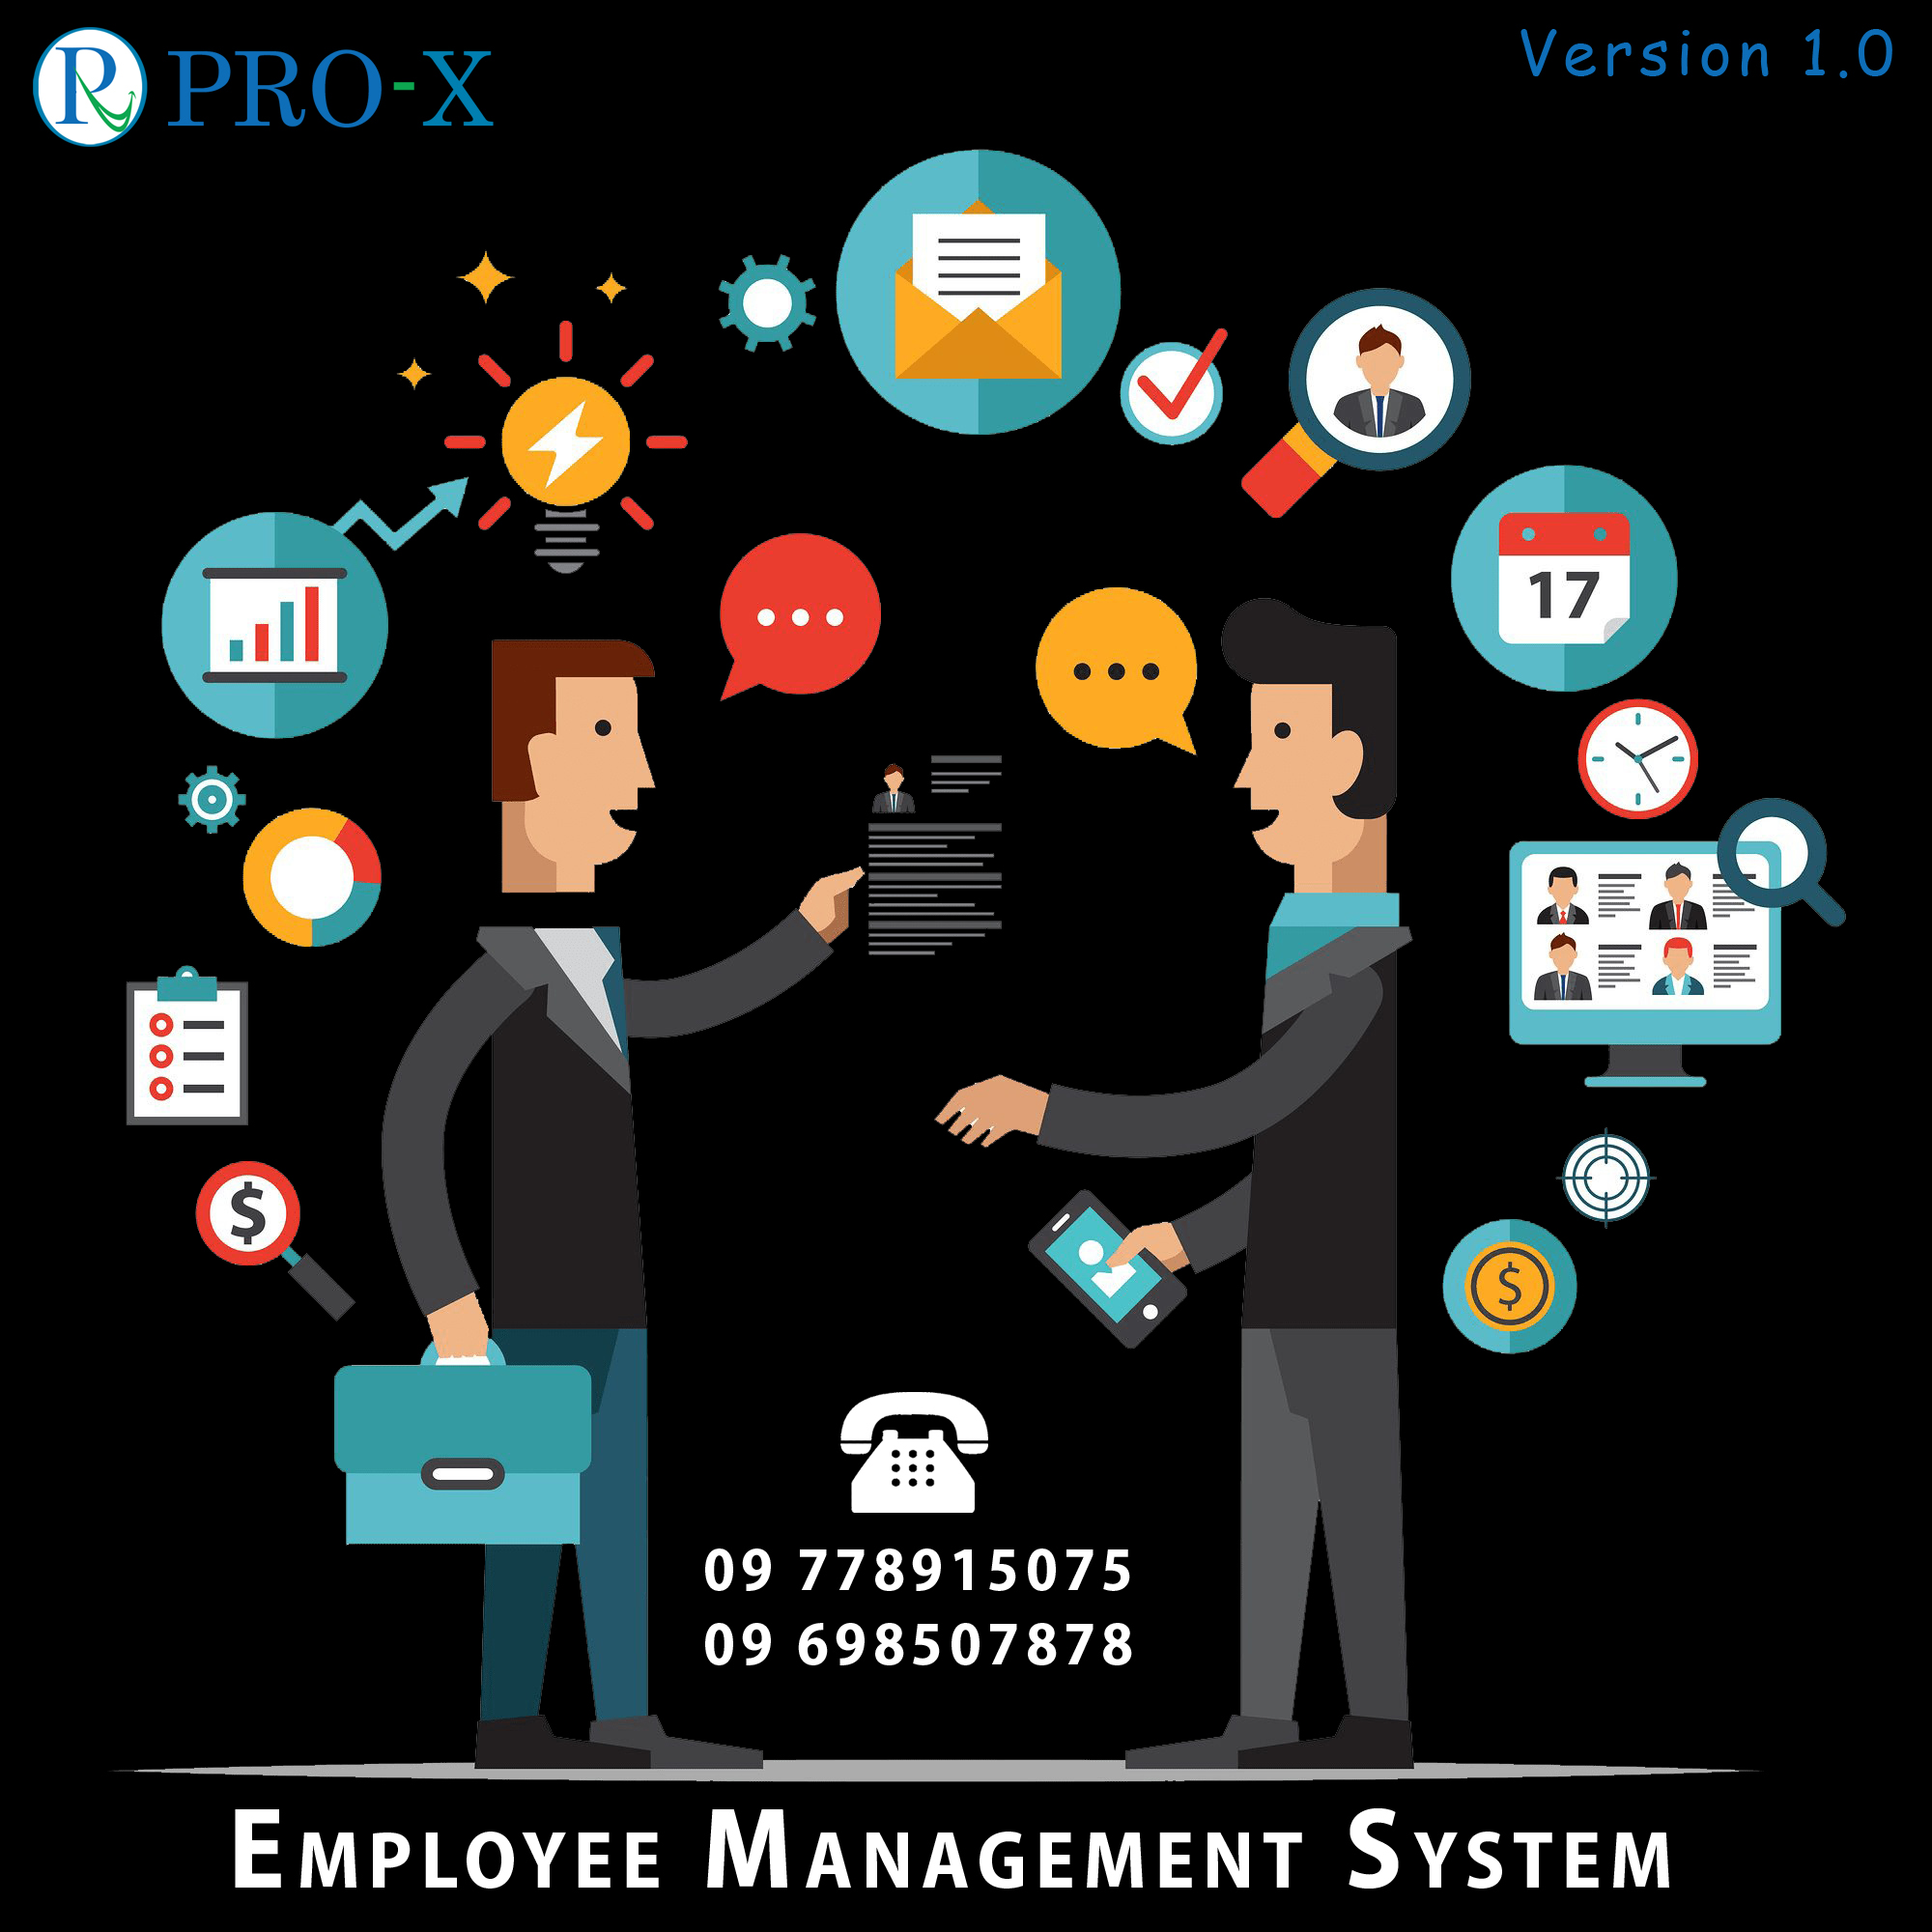 Employee Management System (Version 1.0)